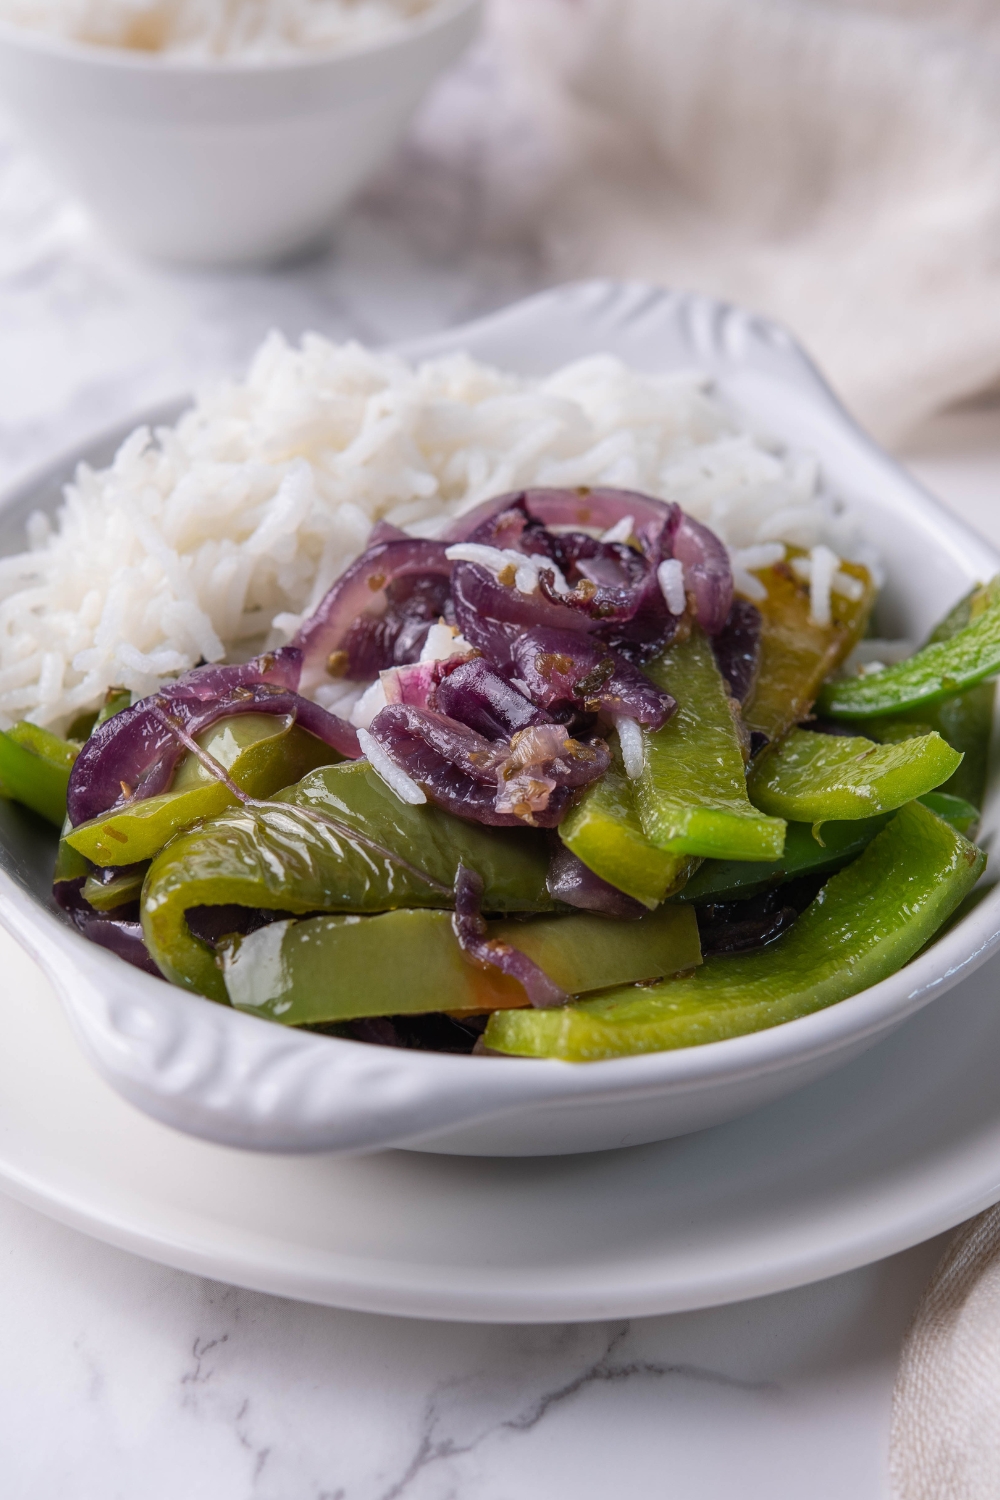 A serving dish with white rice and chipotle fajita veggies.